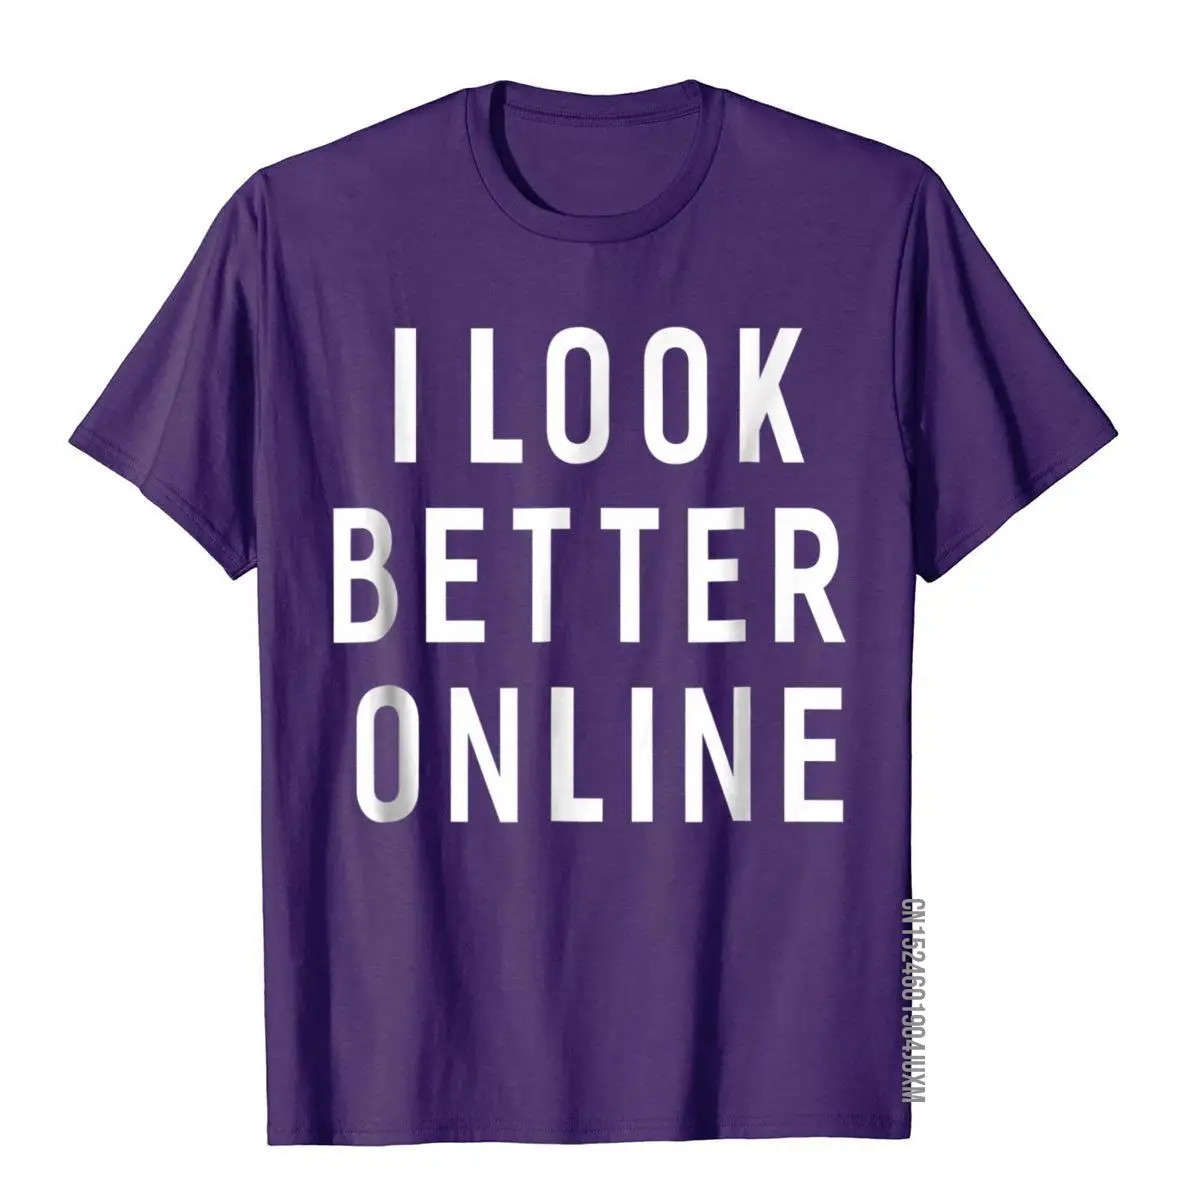 I Look Better Online Funny Sayings T-Shirt For Women Men__97A2064purple